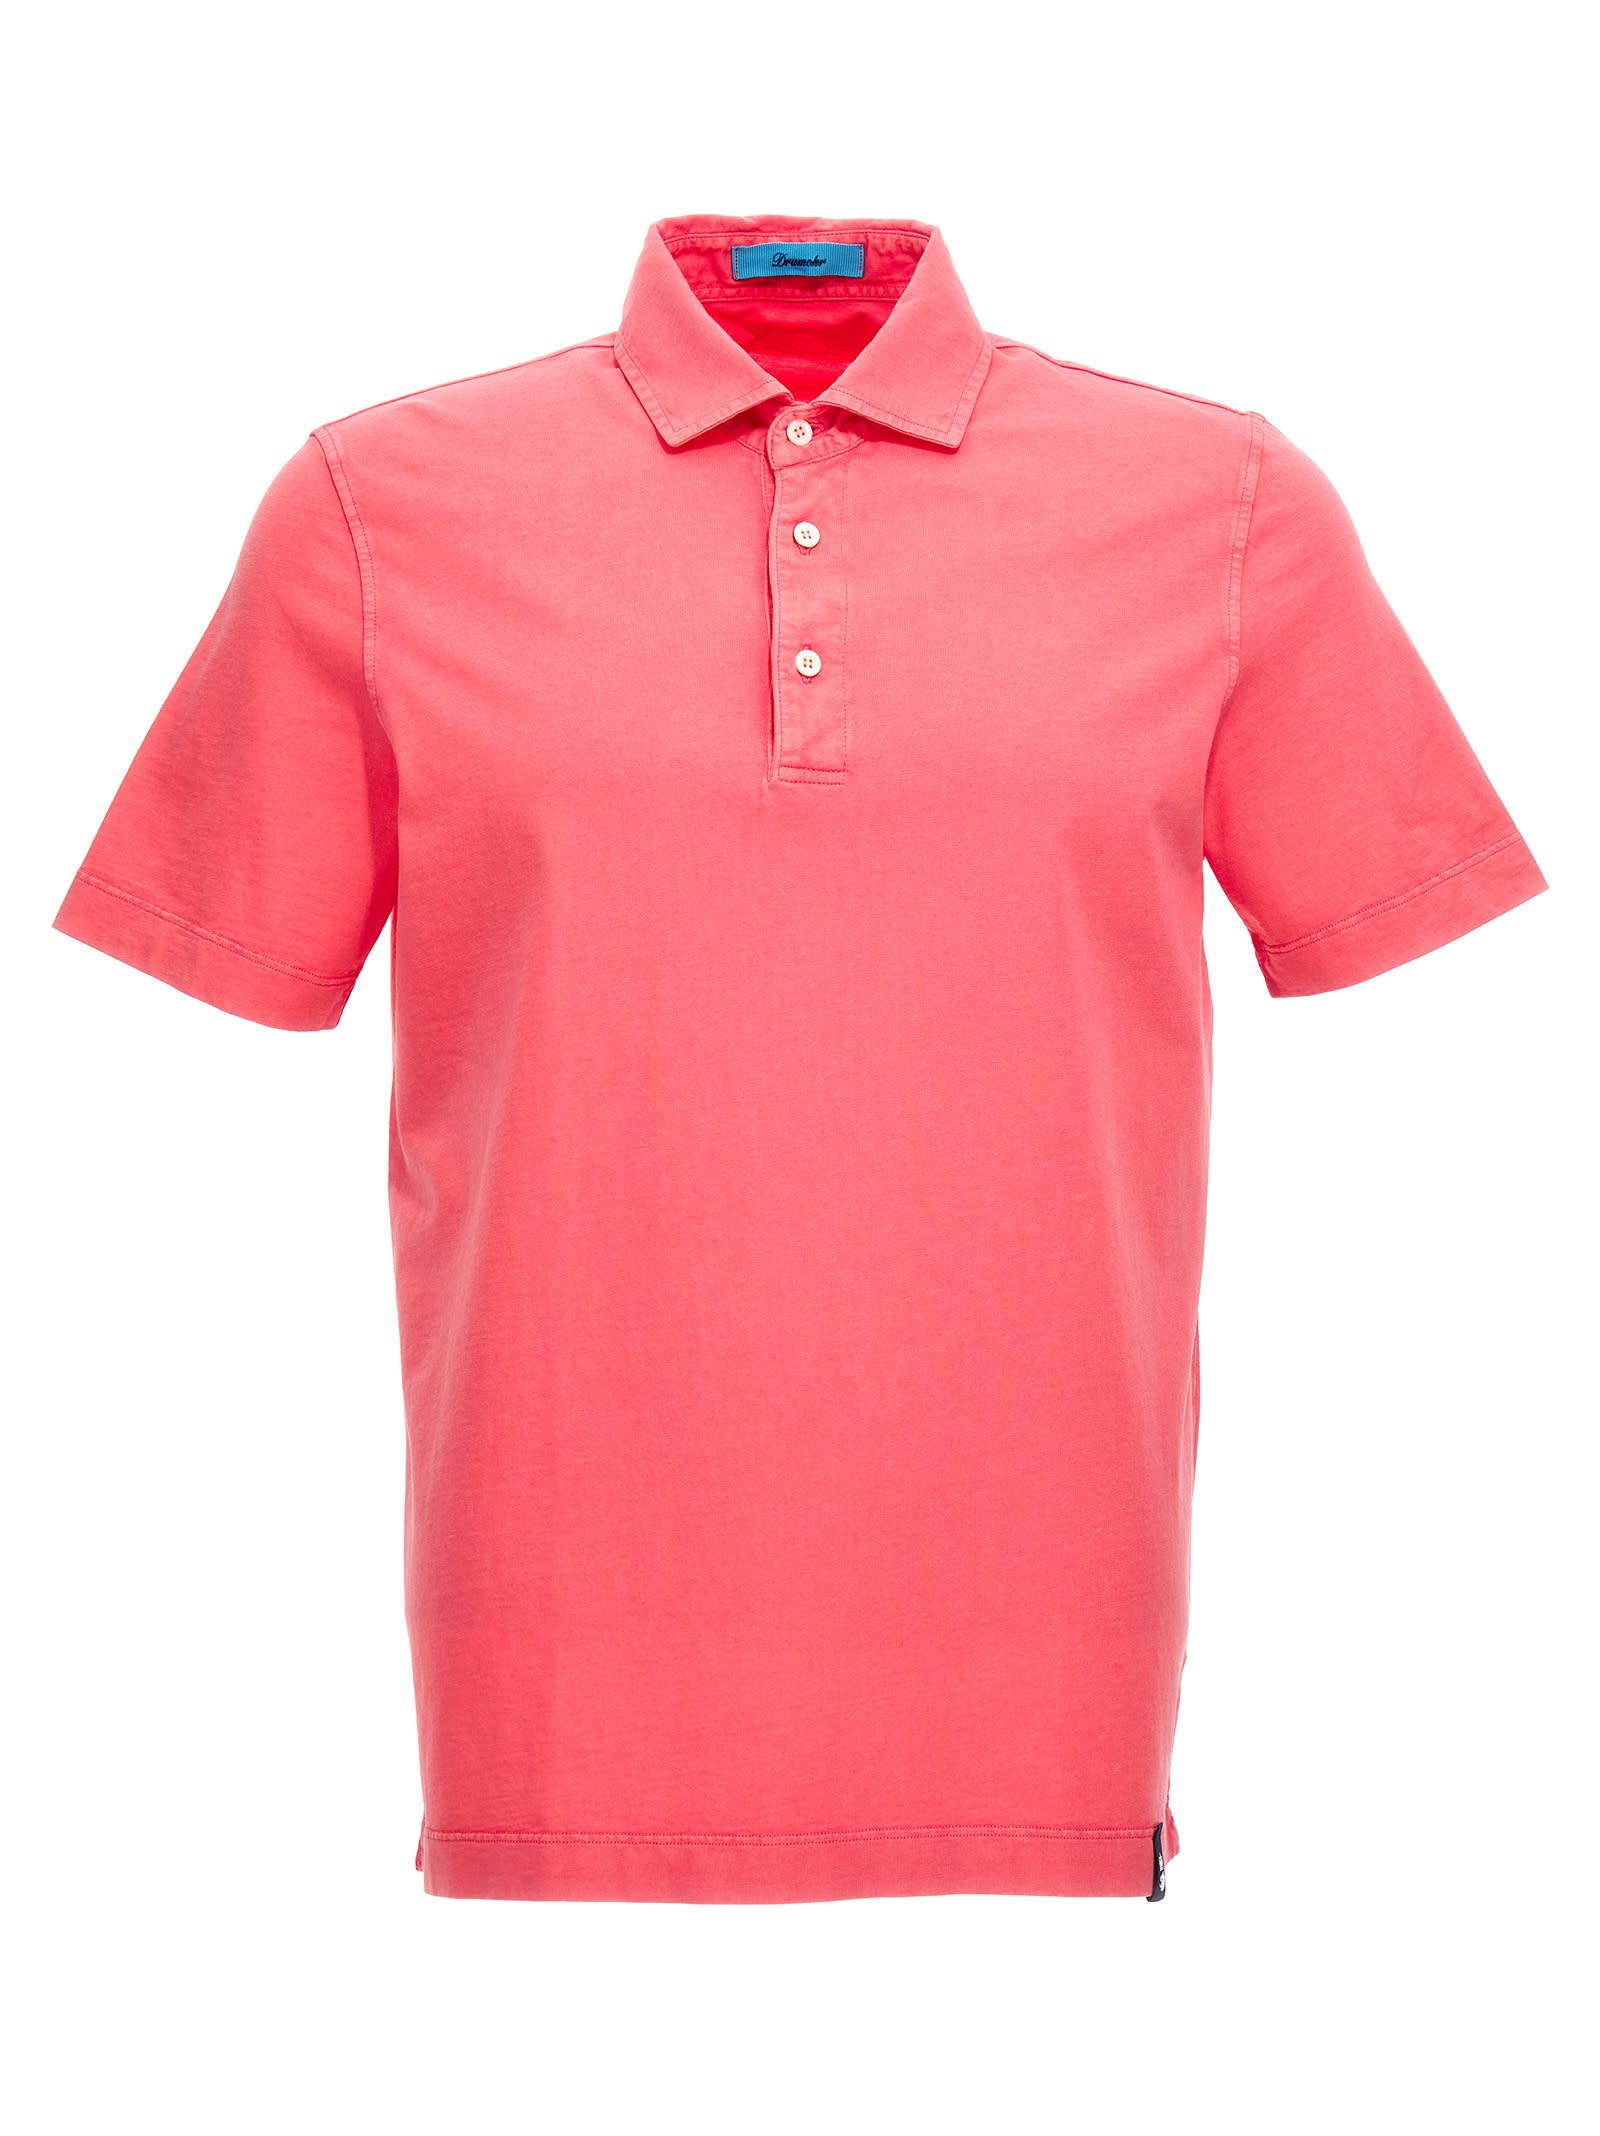 Shop Drumohr Light Cotton Polo Shirt. In Fuchsia